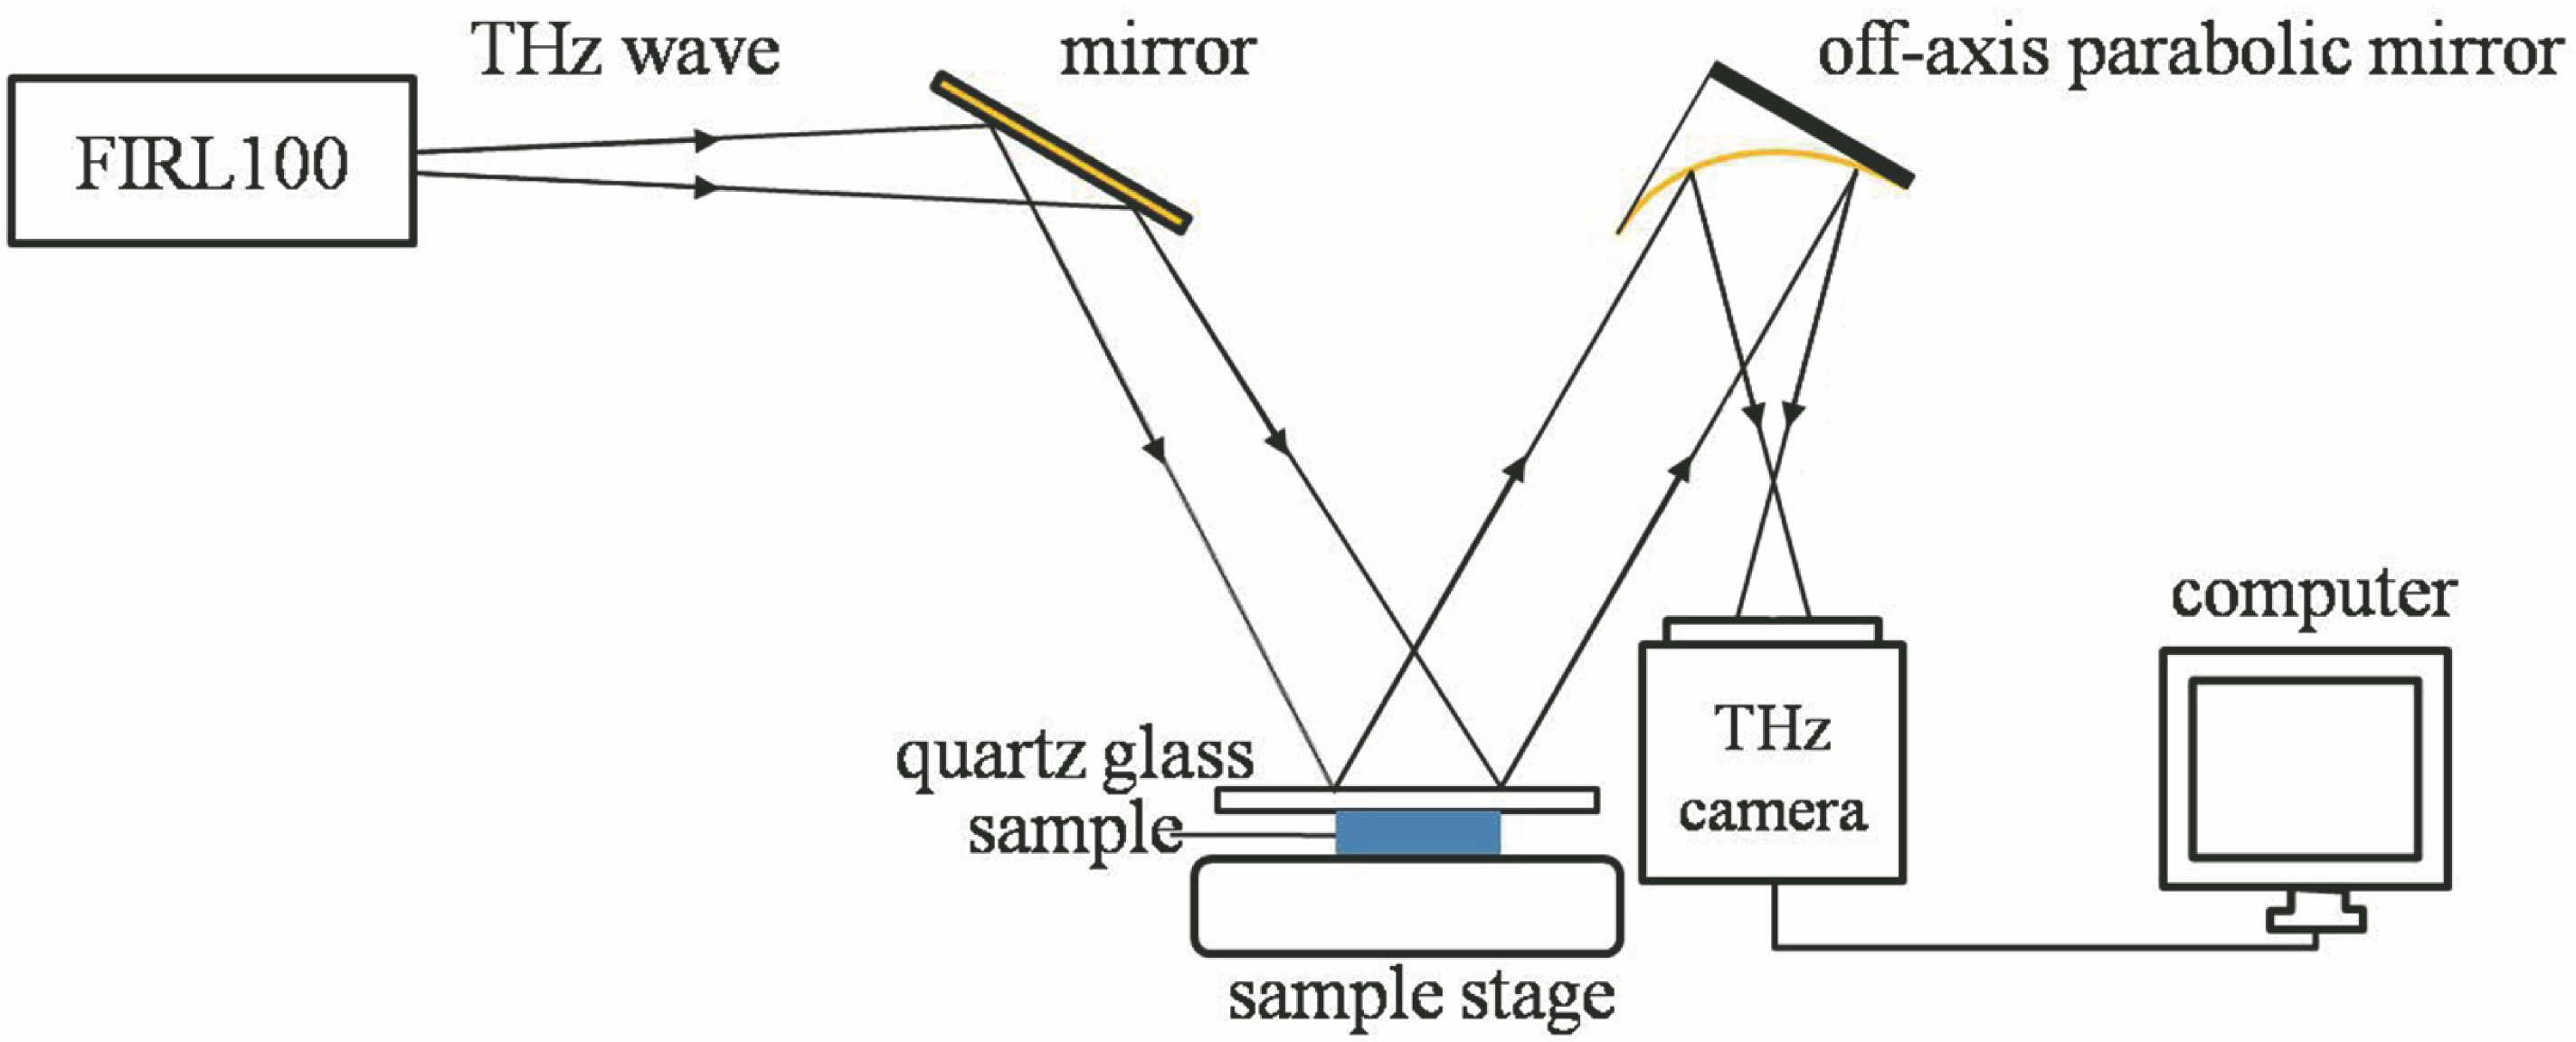 Experimental setup for reflective terahertz focal plane imaging